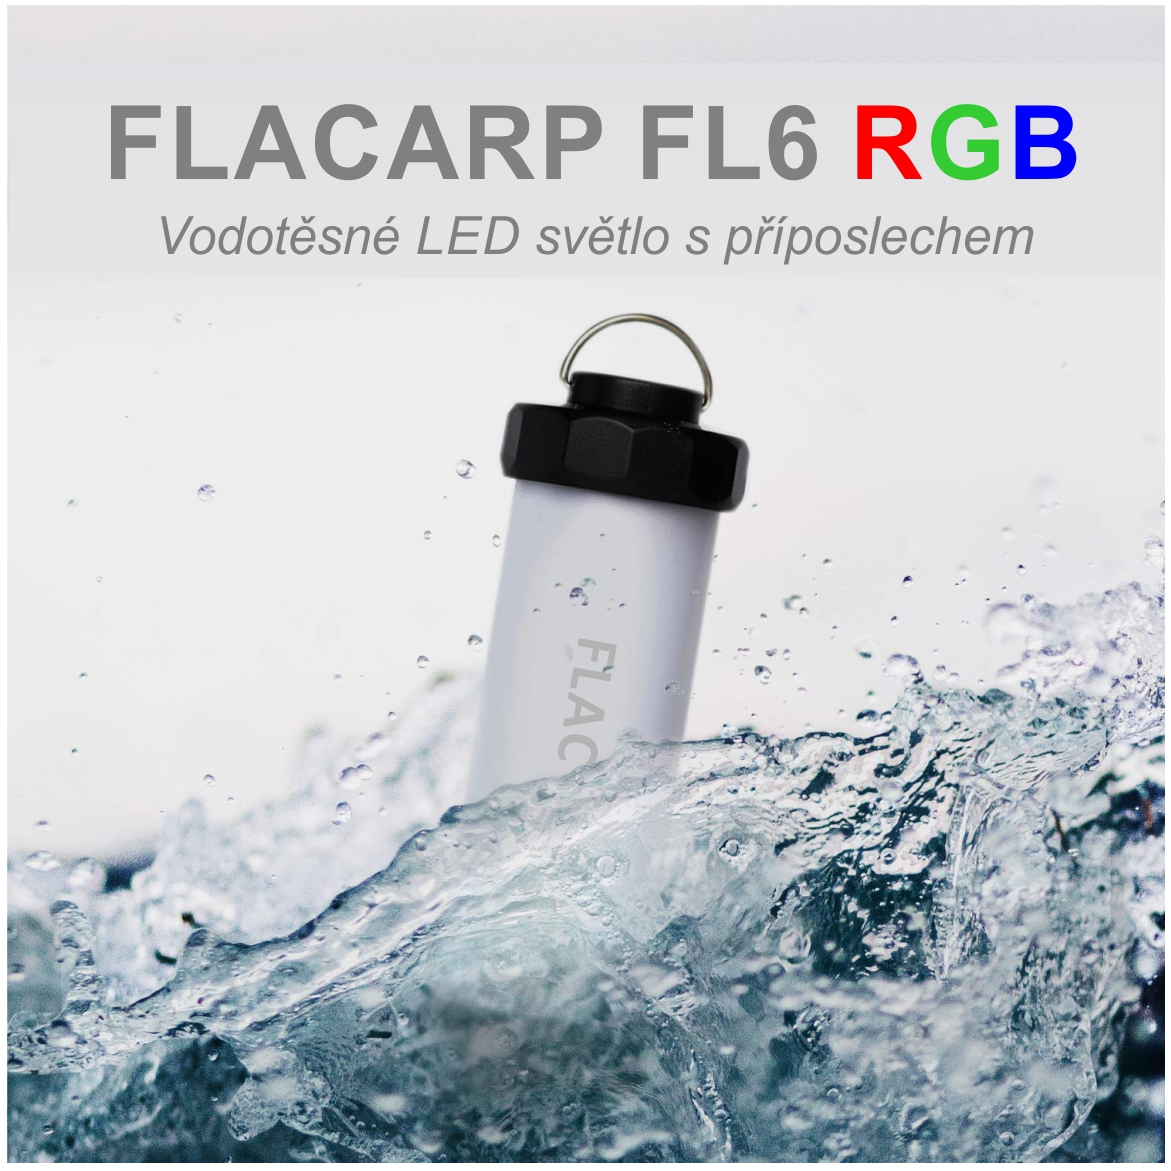 Signalizátor záměru FLACARP F1